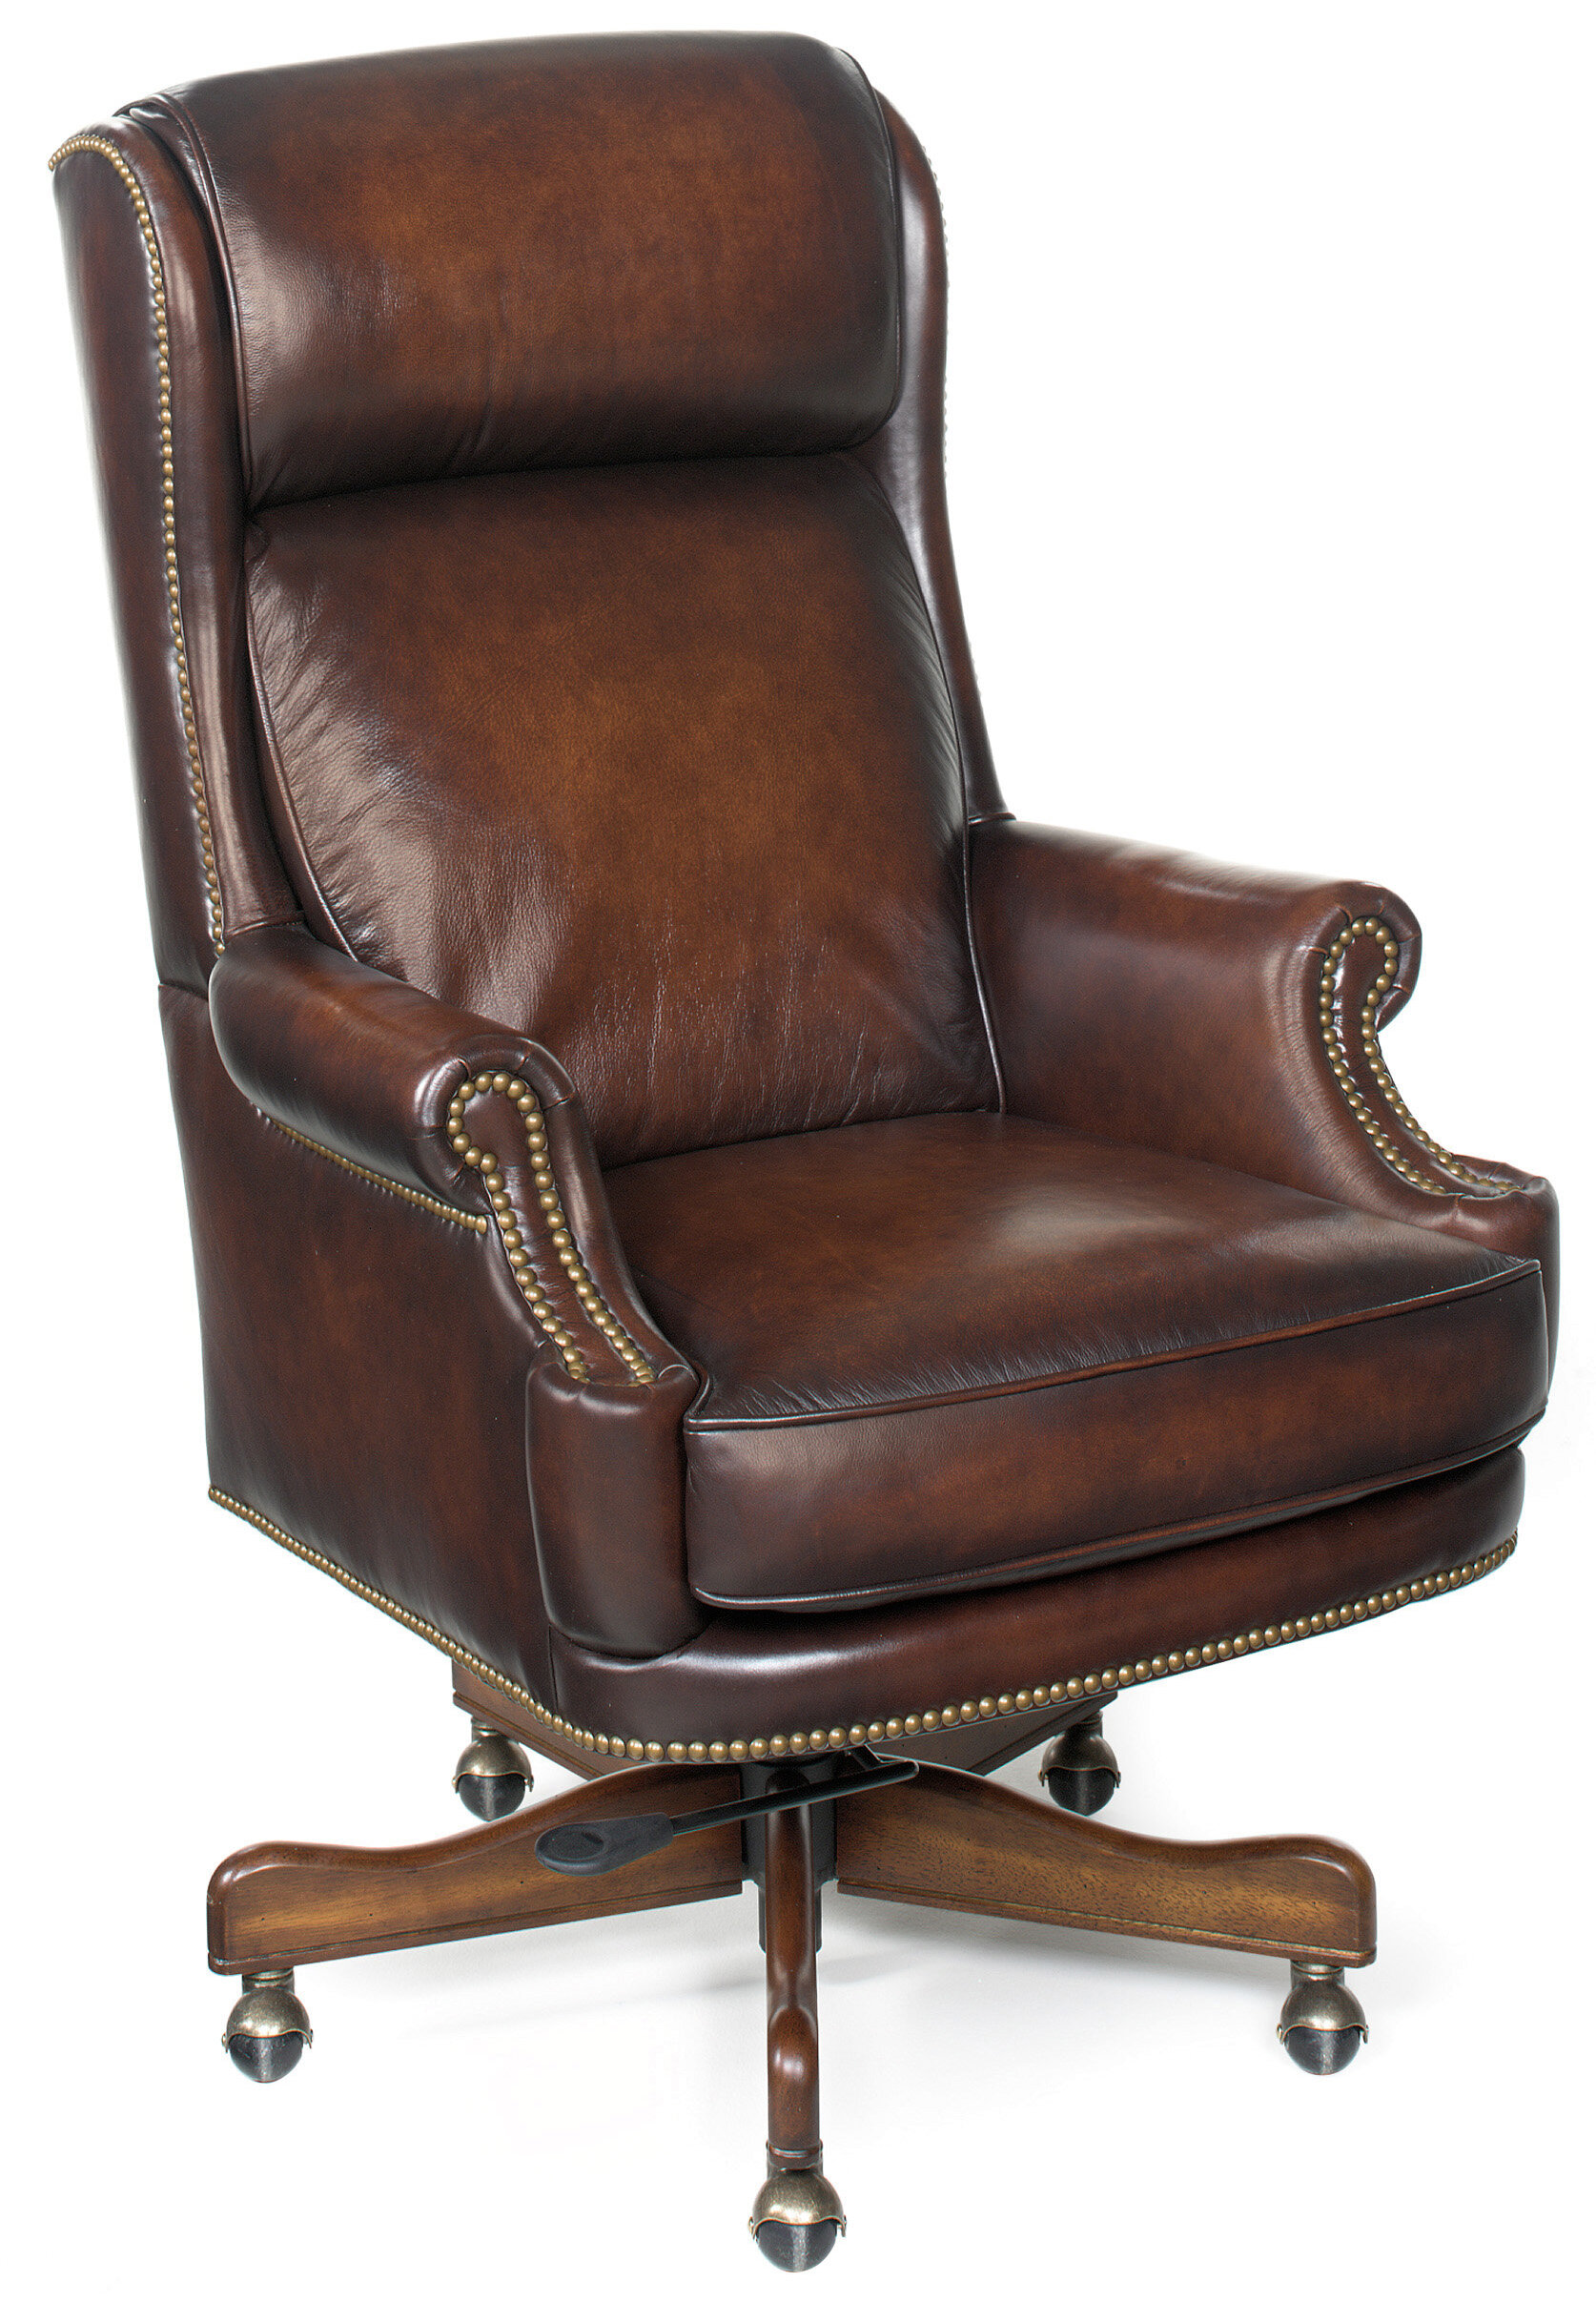 Hooker Furniture James River Genuine Leather Executive Chair Reviews Wayfair